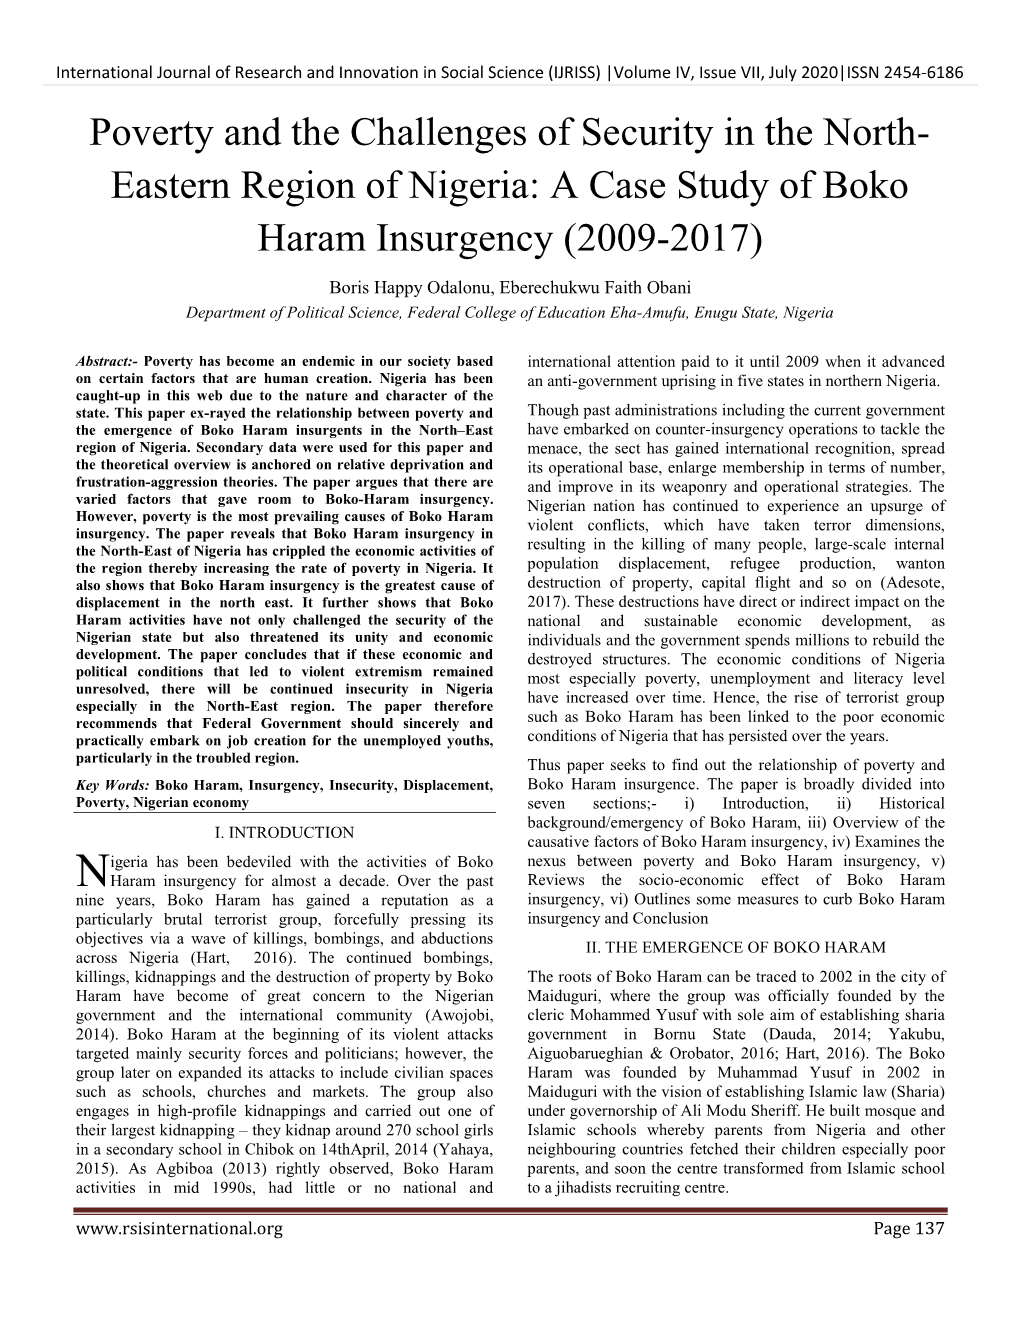 Eastern Region of Nigeria: a Case Study of Boko Haram Insurgency (2009-2017)